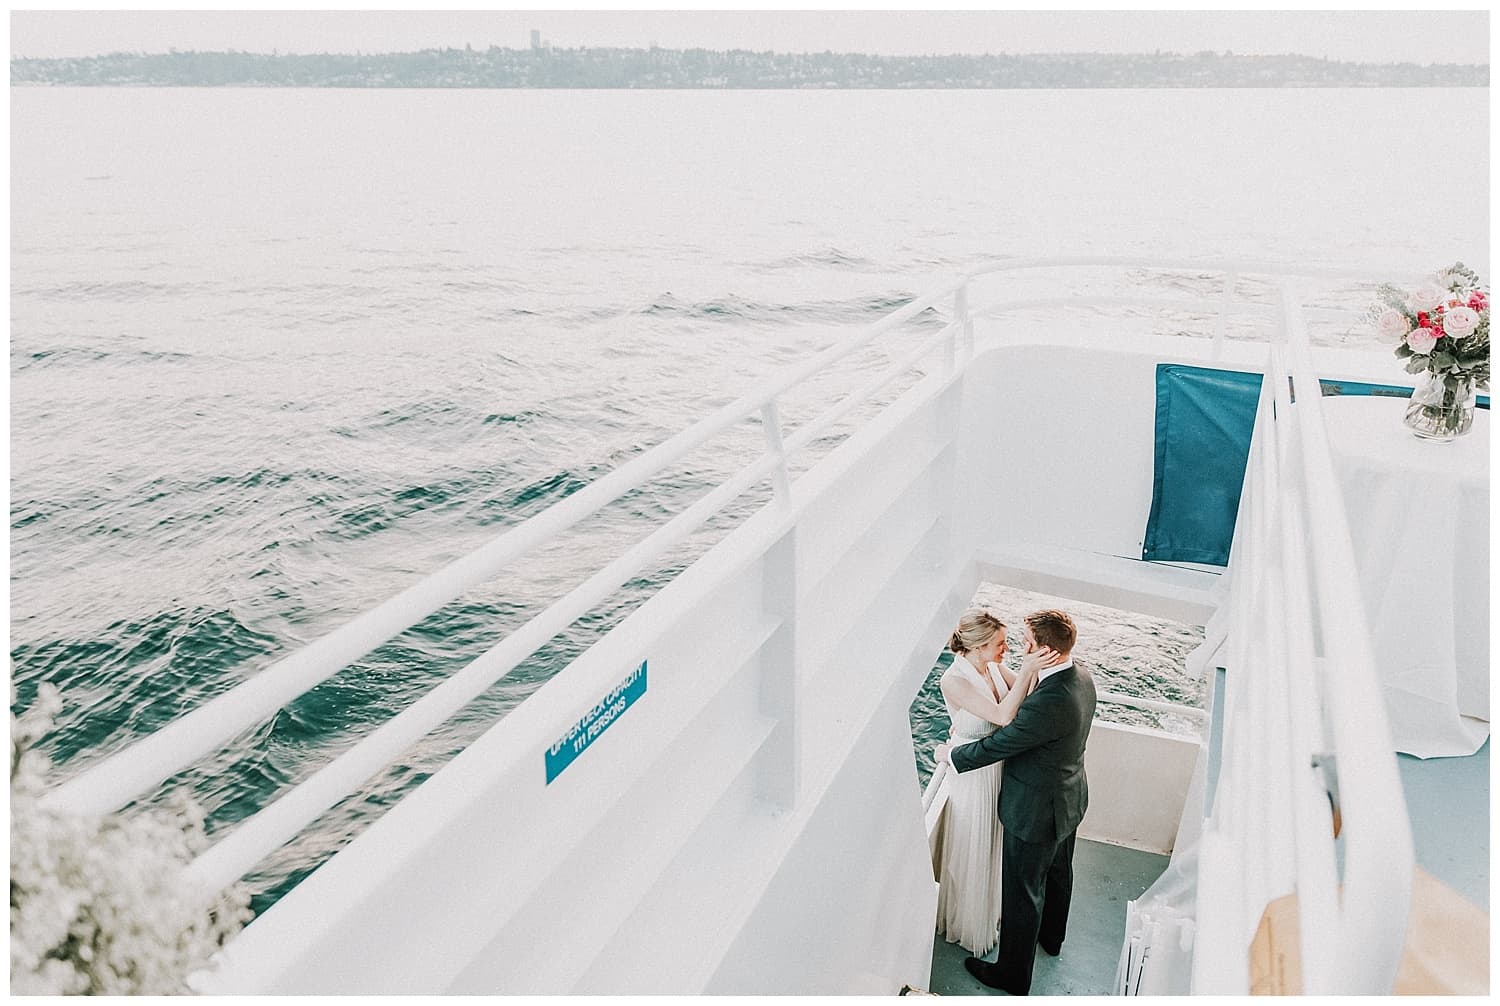 Waterways Cruises & Events wedding on a boat around Lake Union, WA by Seattle wedding photographer Kyle Goldie of Luma Weddings